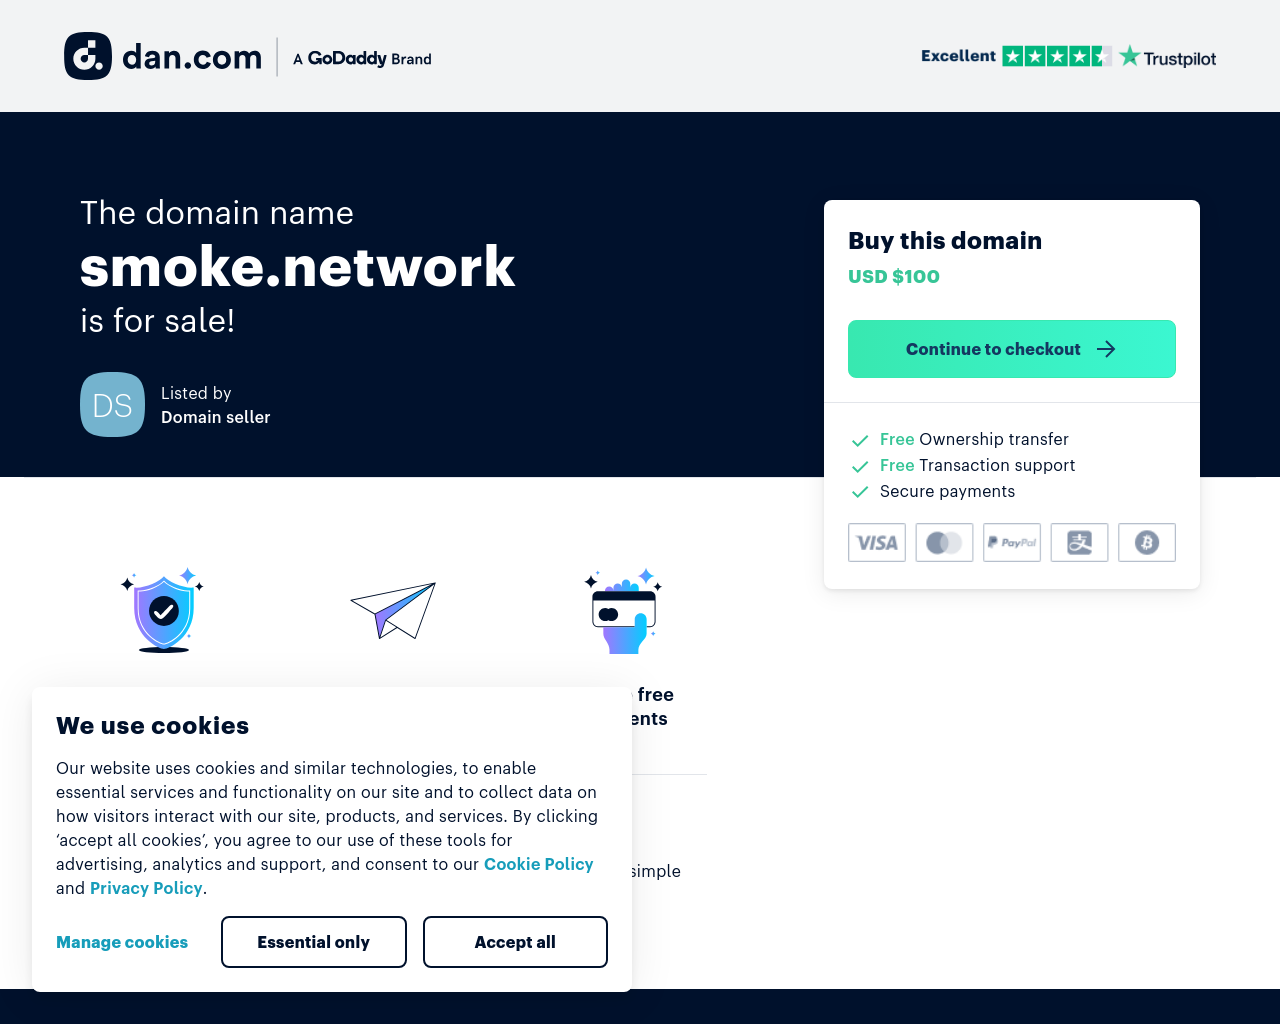 smoke.network